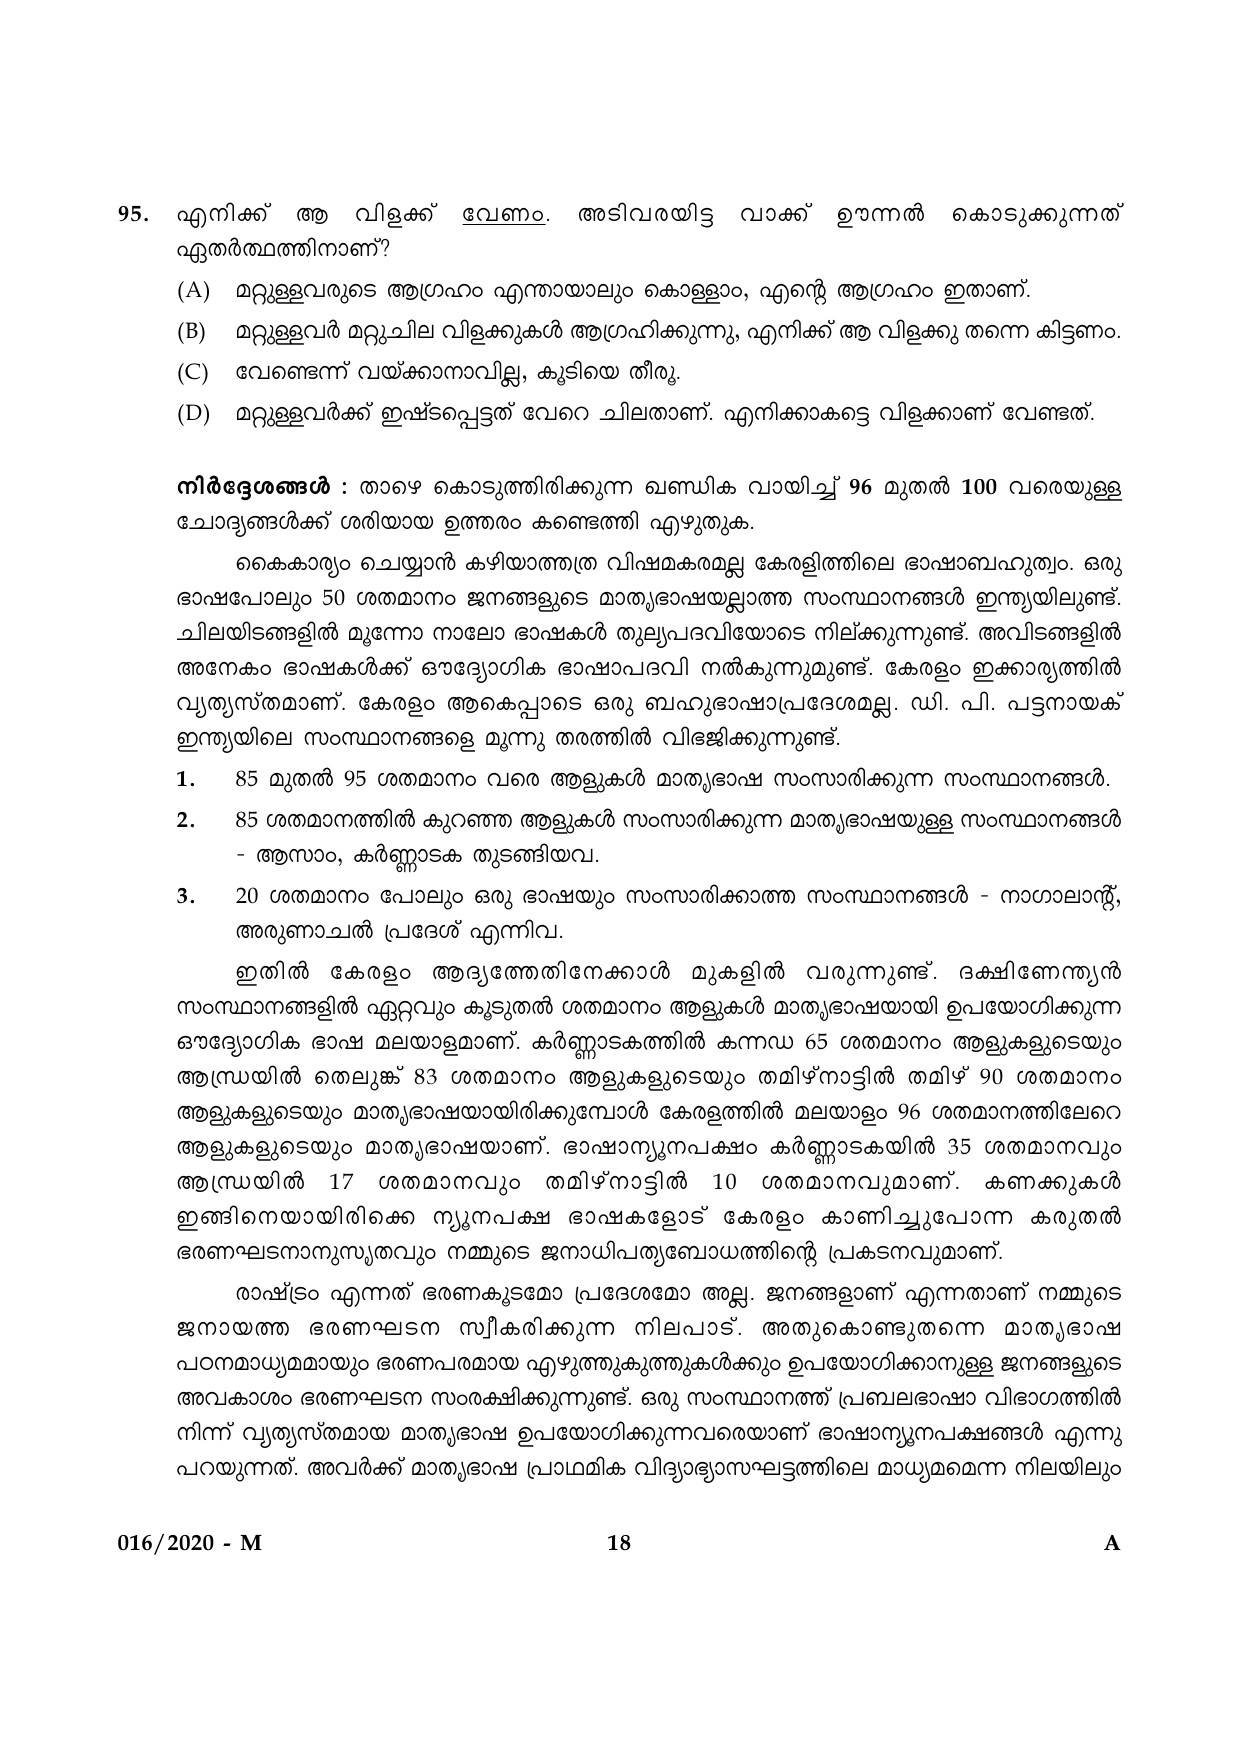 KAS Officer Trainee Malayalam Exam 2020 Code 0162020 17